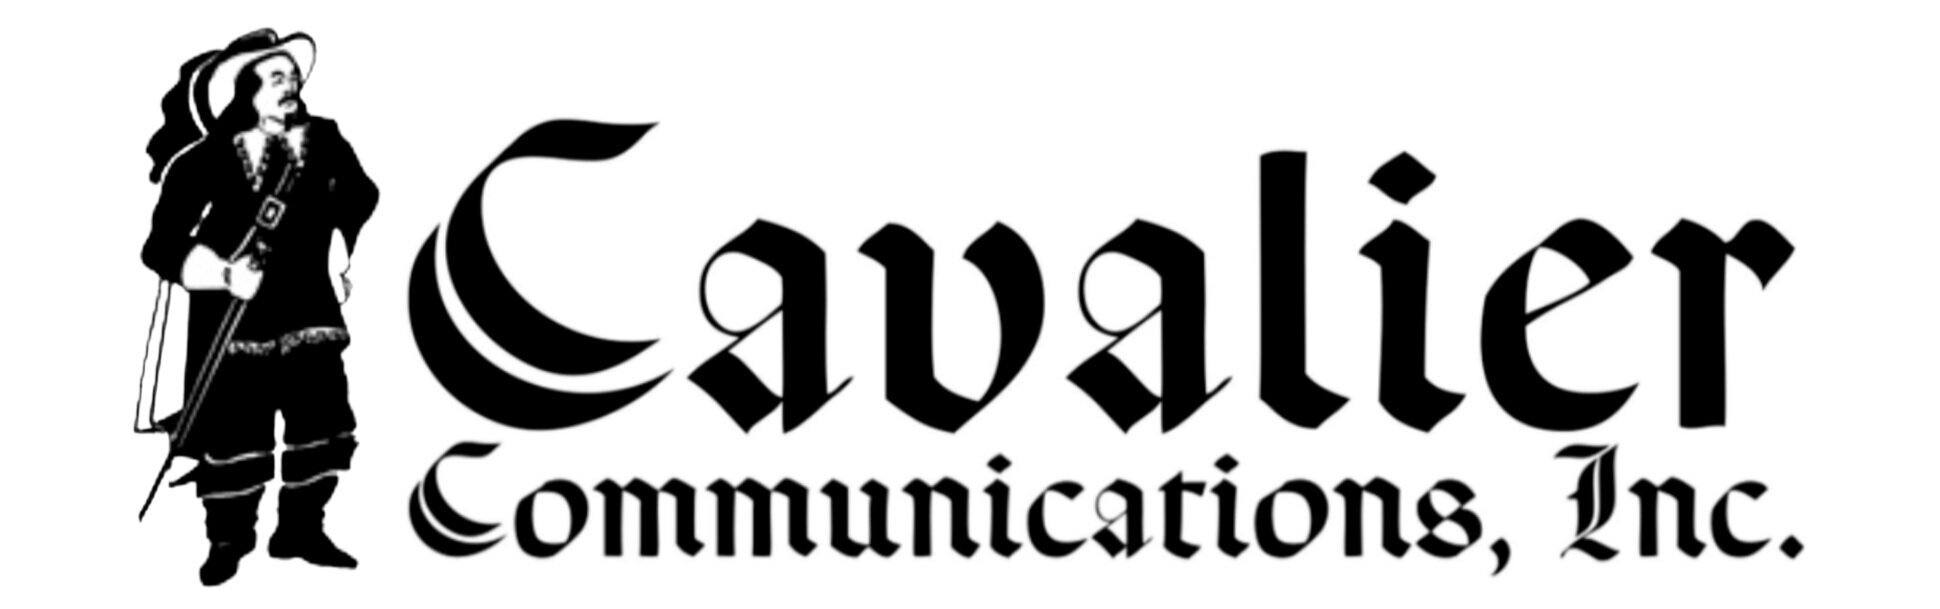 Cavalier Communications